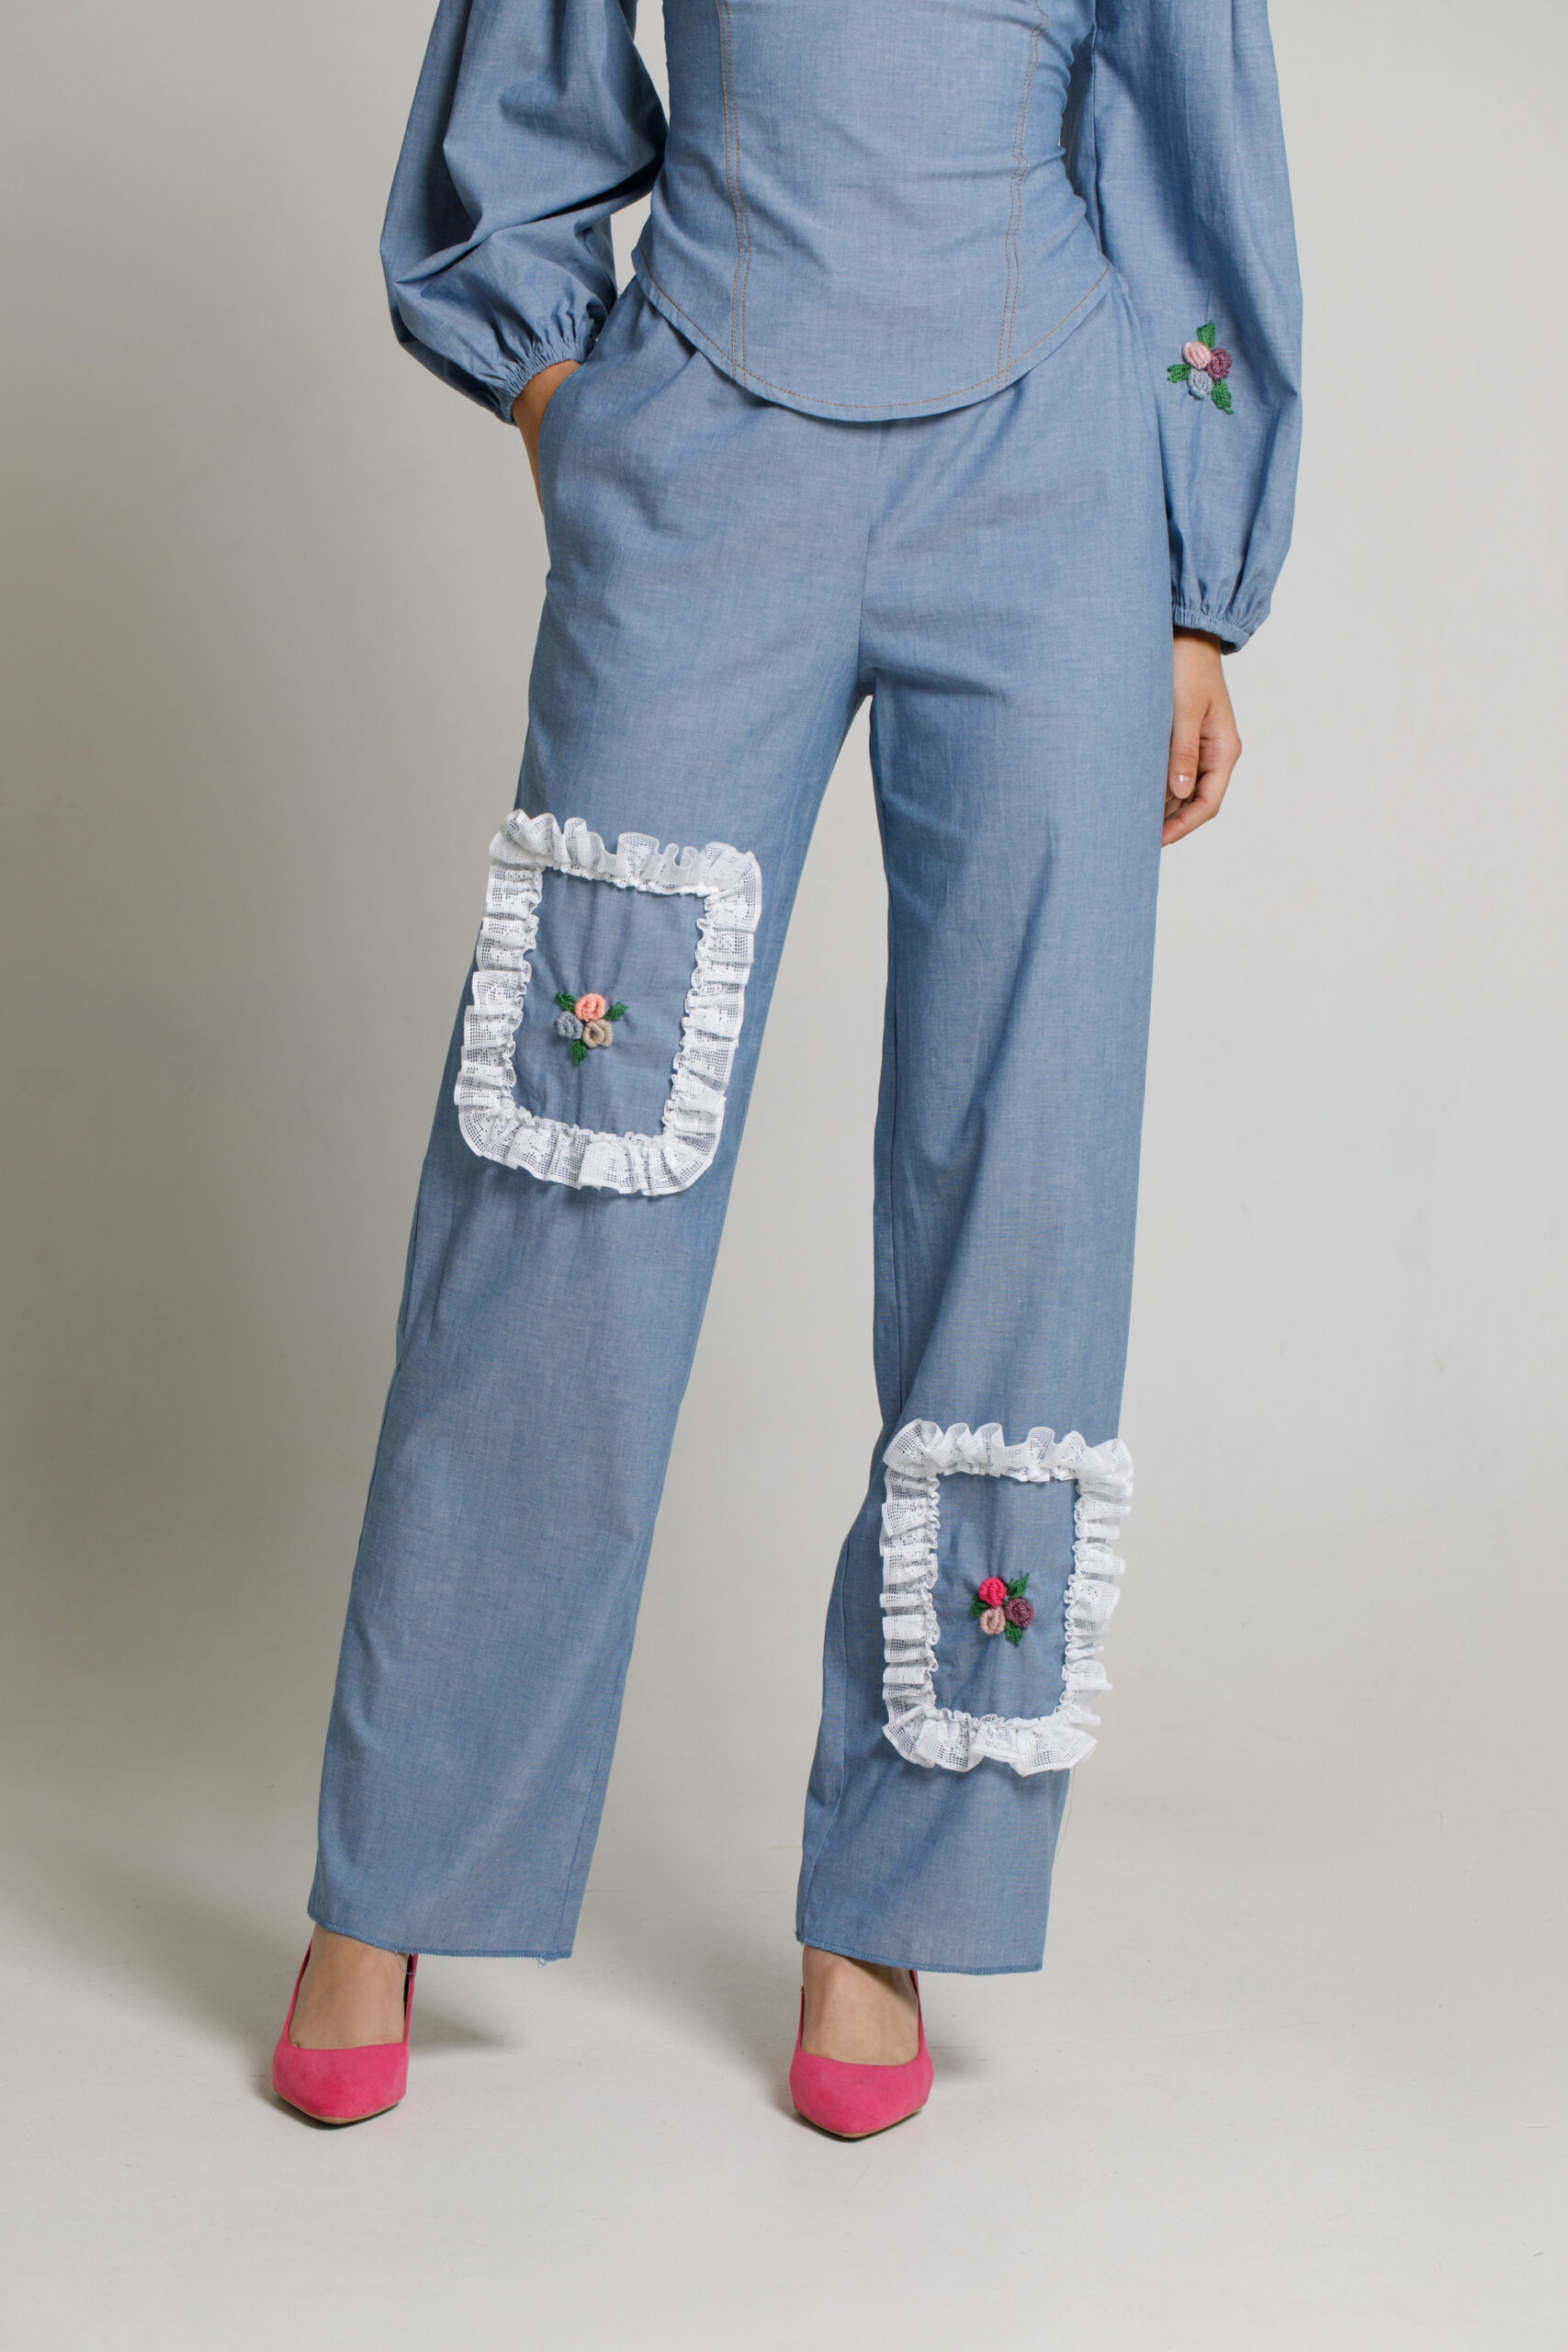 CIELO casual denim pants with lace. Natural fabrics, original design, handmade embroidery